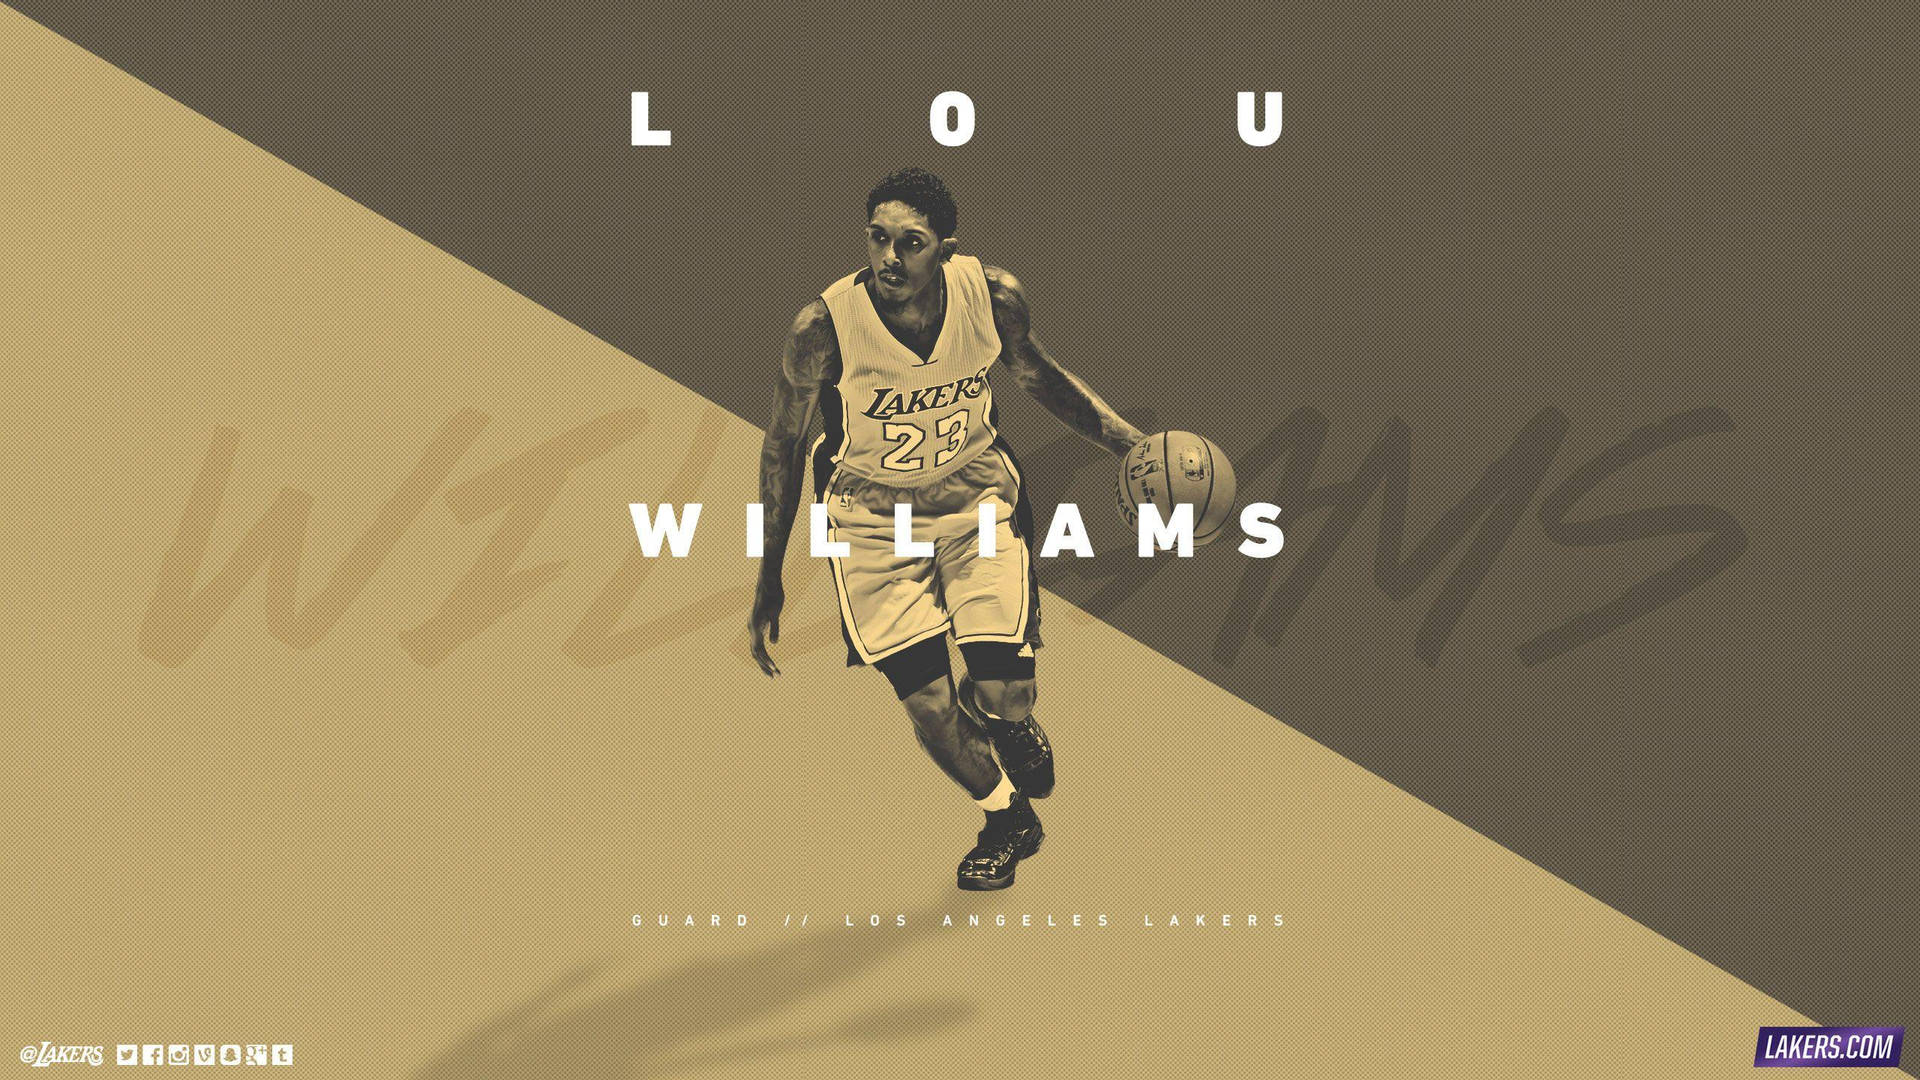 Lou Williams Digital Image Background